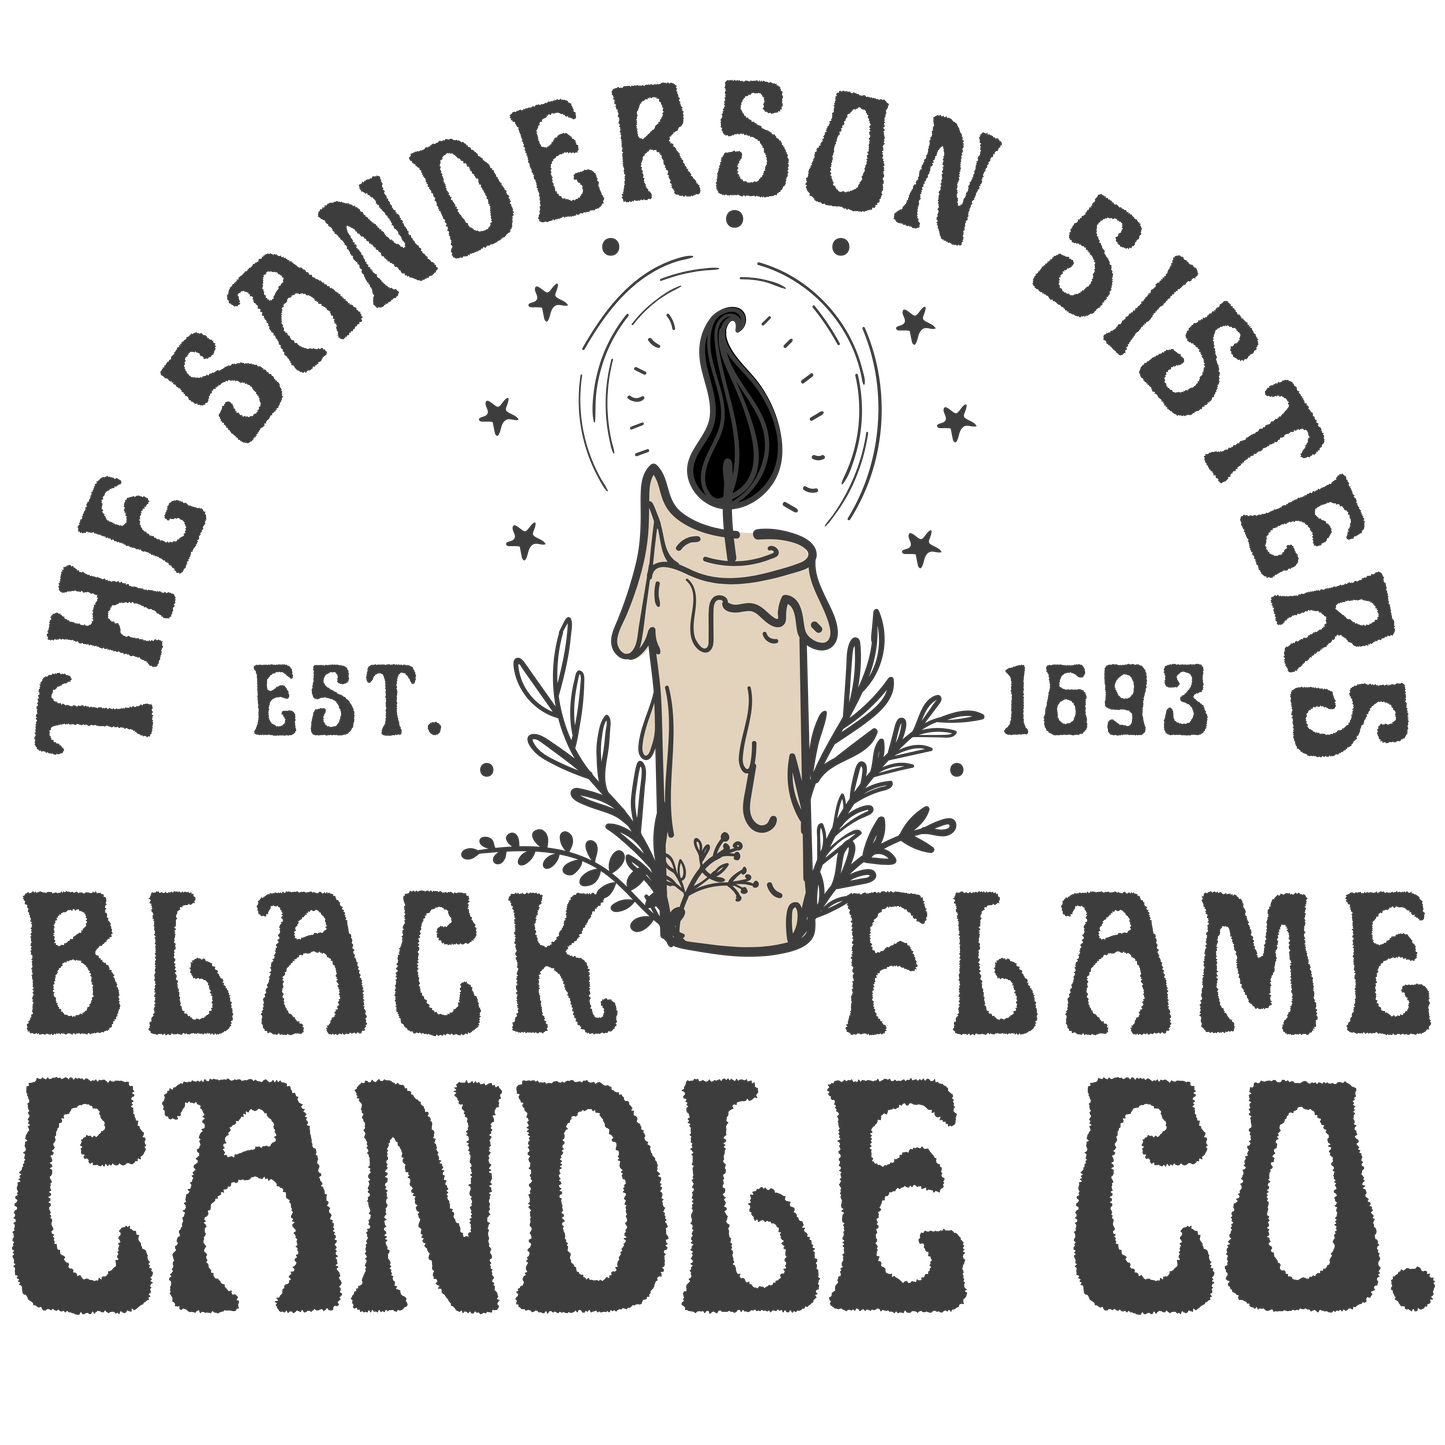 Black Flame Candle Co. Logo